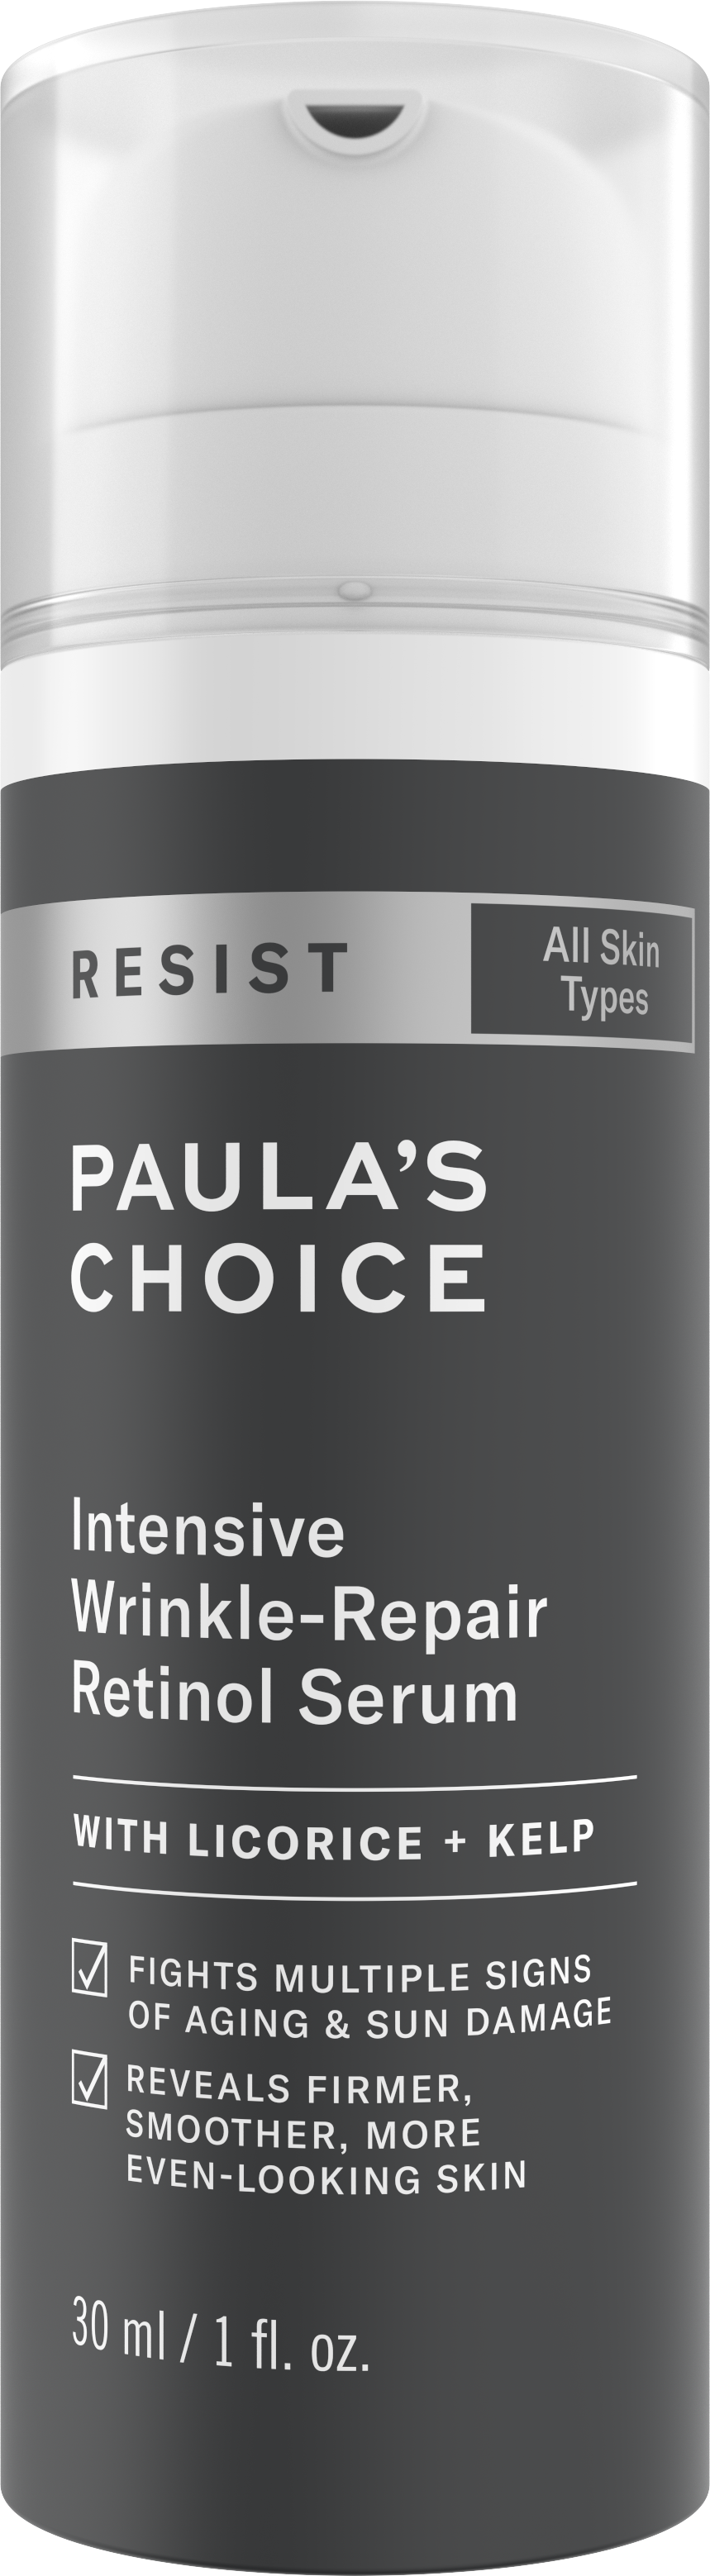 Paula's Choice RESIST Intensive Wrinkle-Repair Retinol Serum  1